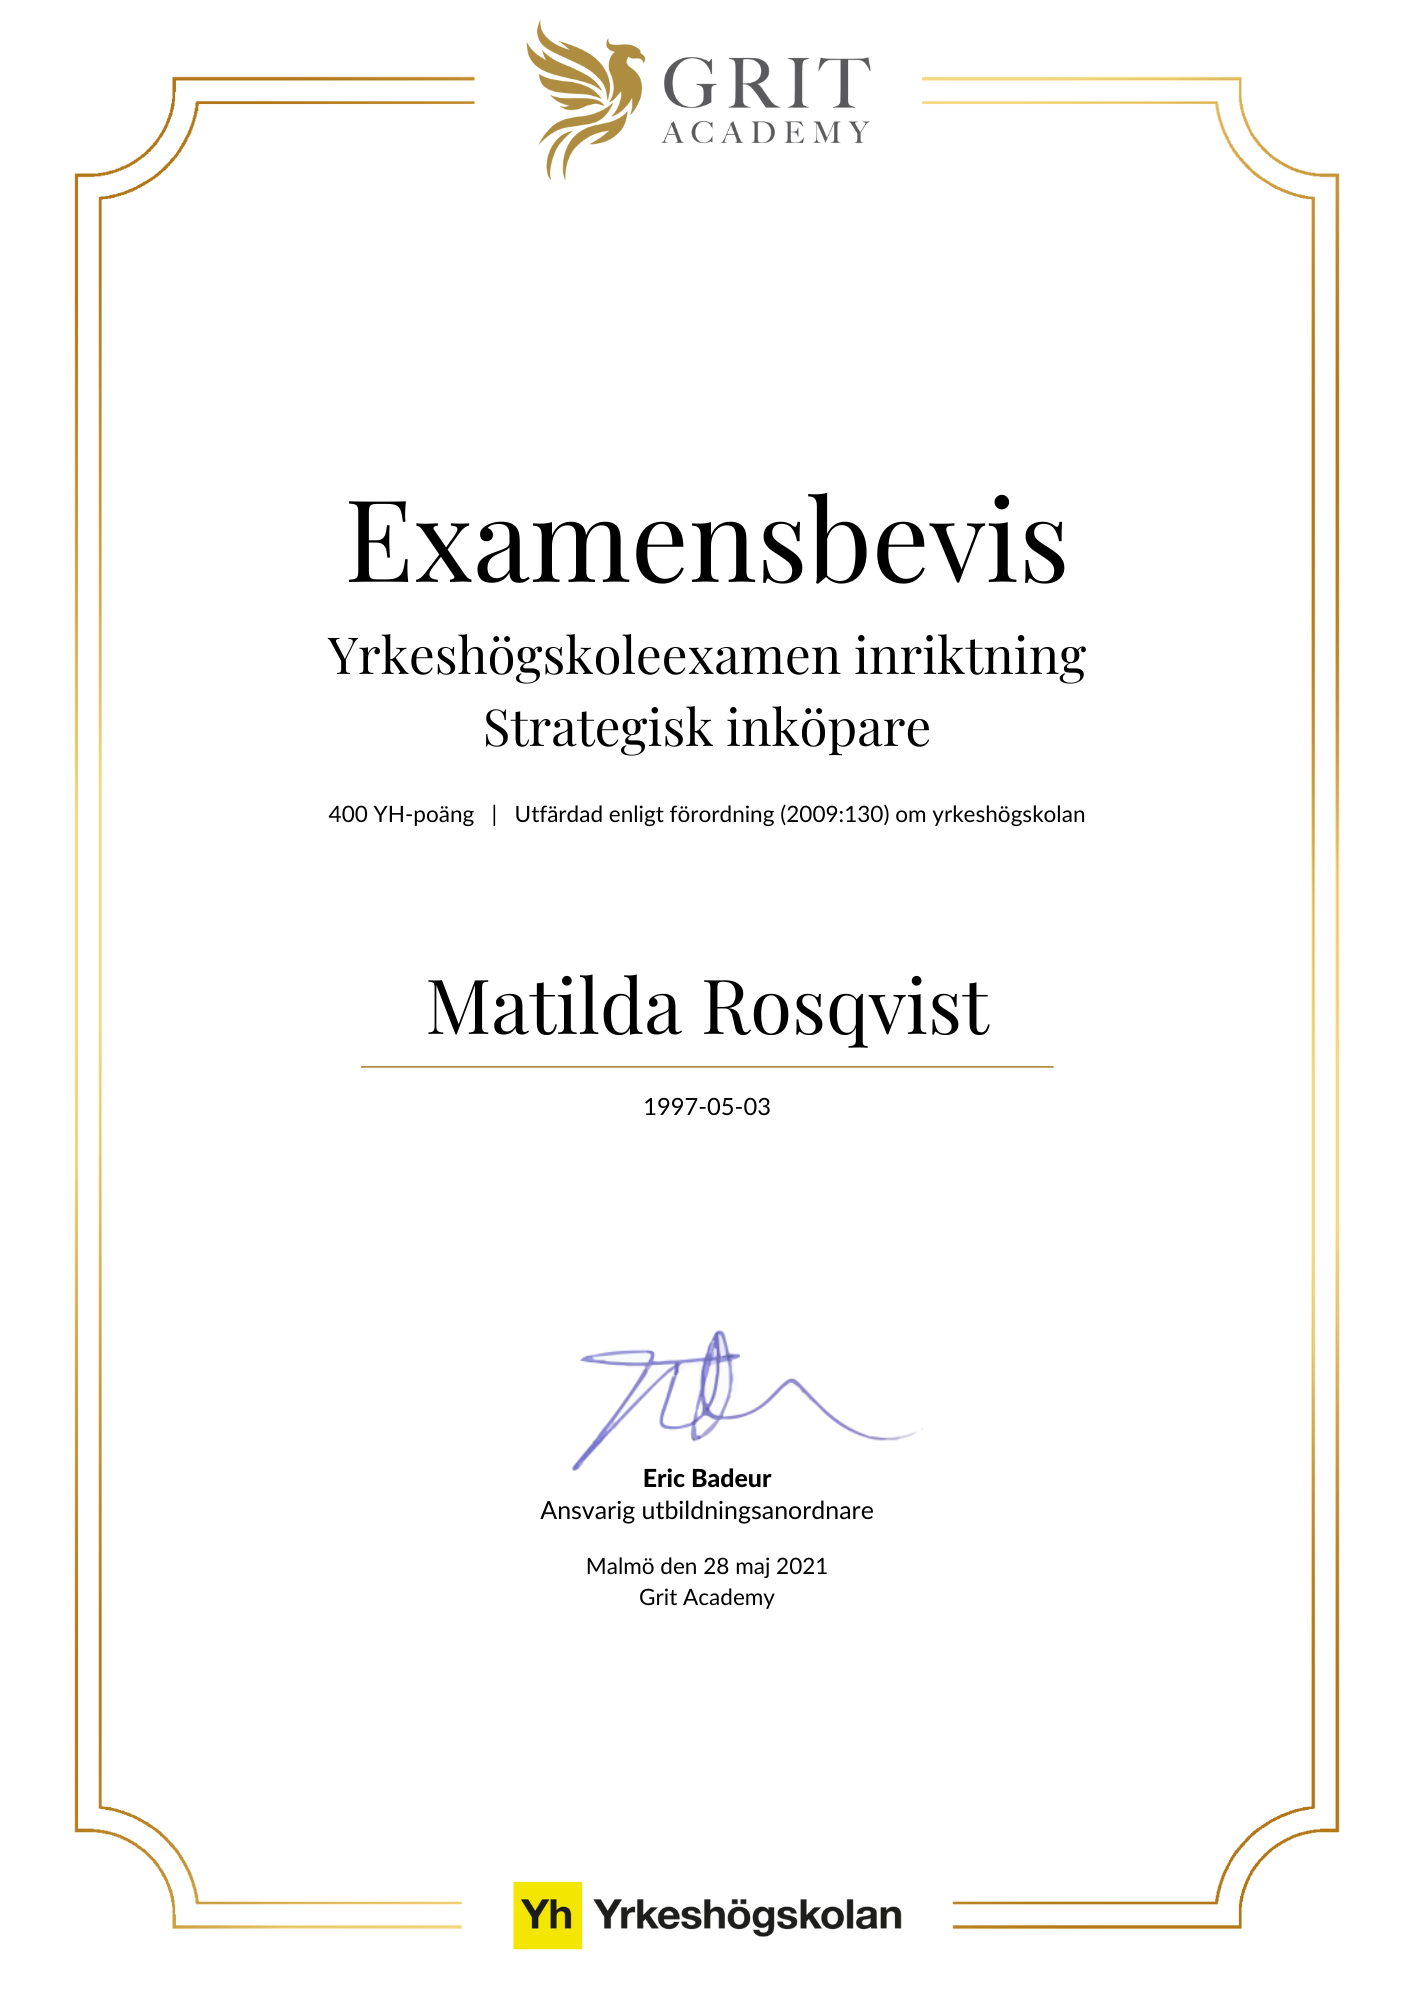 Examensbevis Matilda Rosqvist - 1